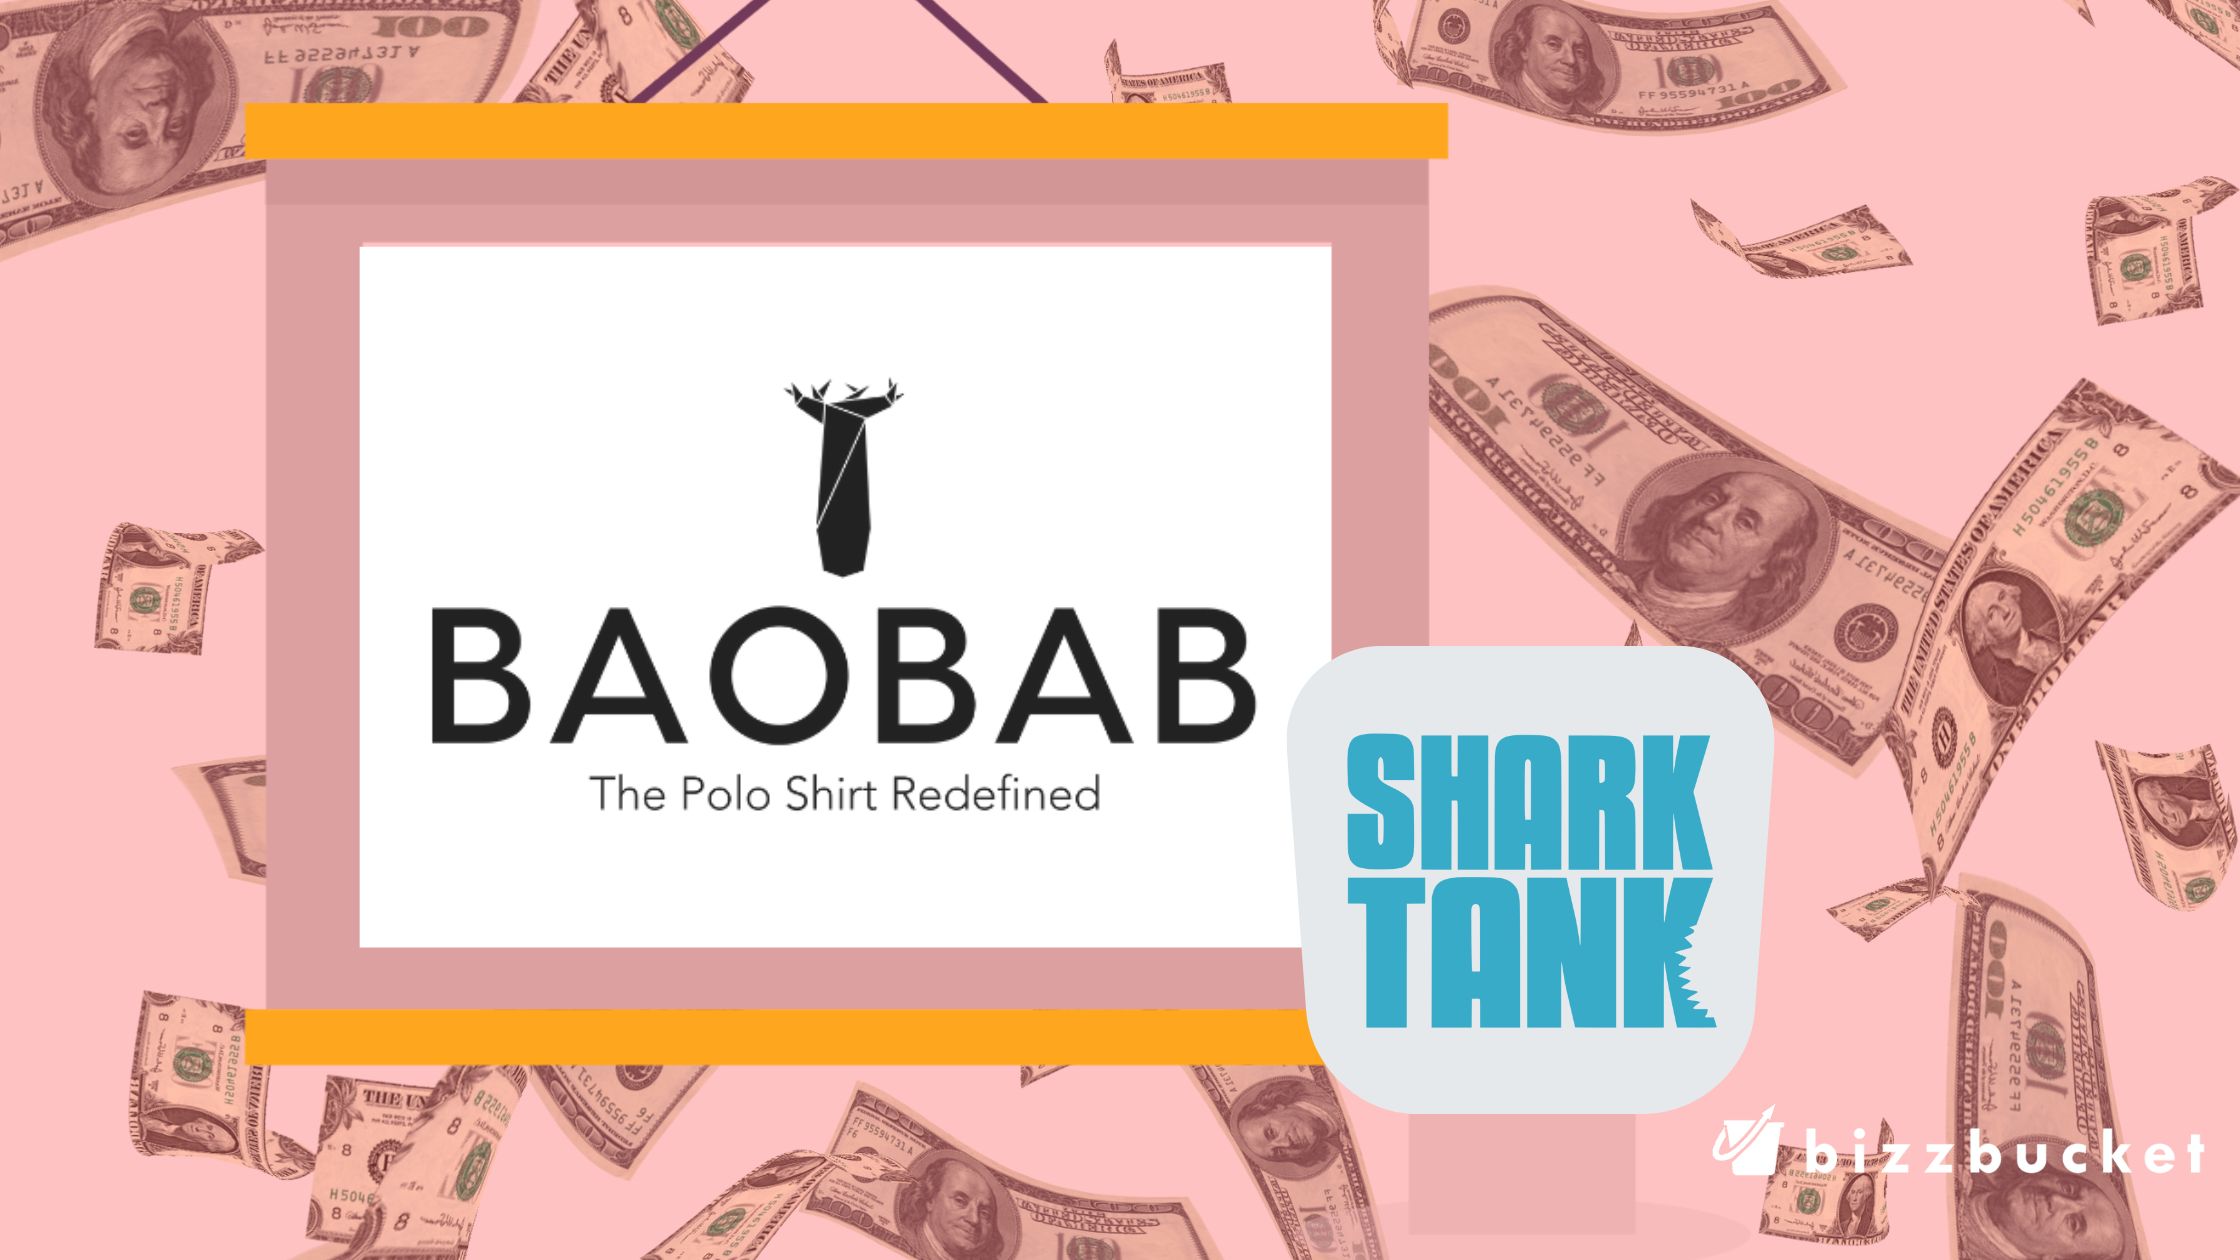 Baobab shark tank update